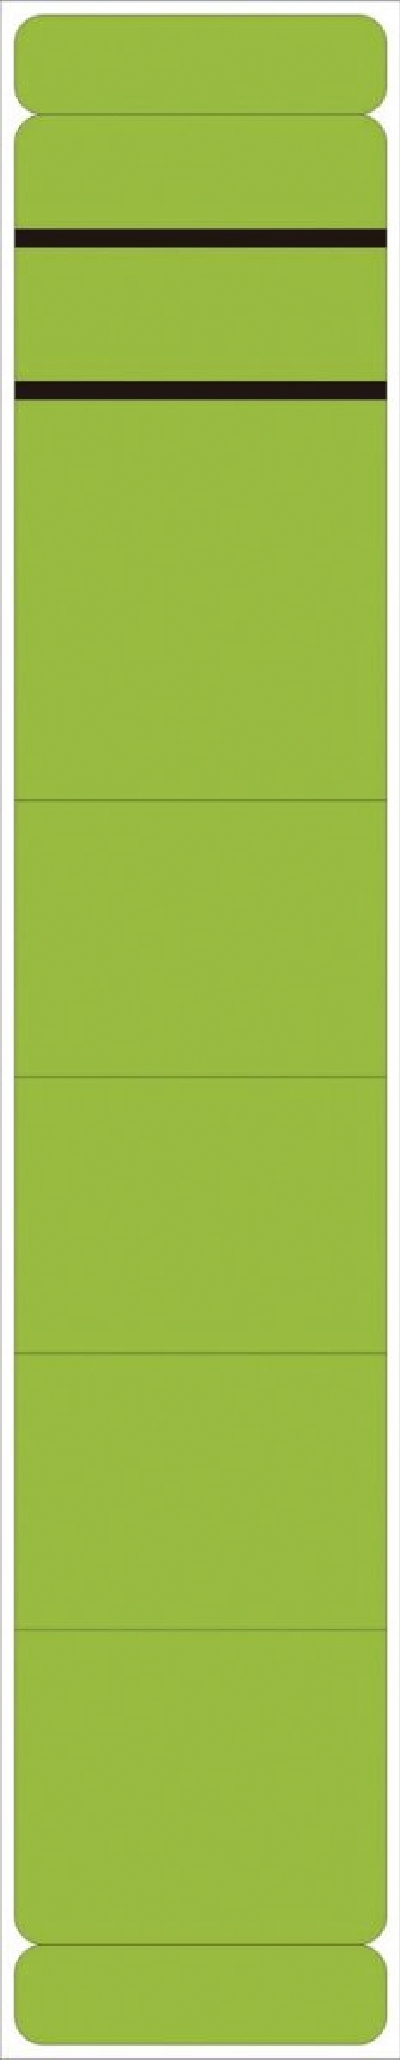 Neutral Ordner Rückenschilder - schmal/kurz, 190 Stück, grün